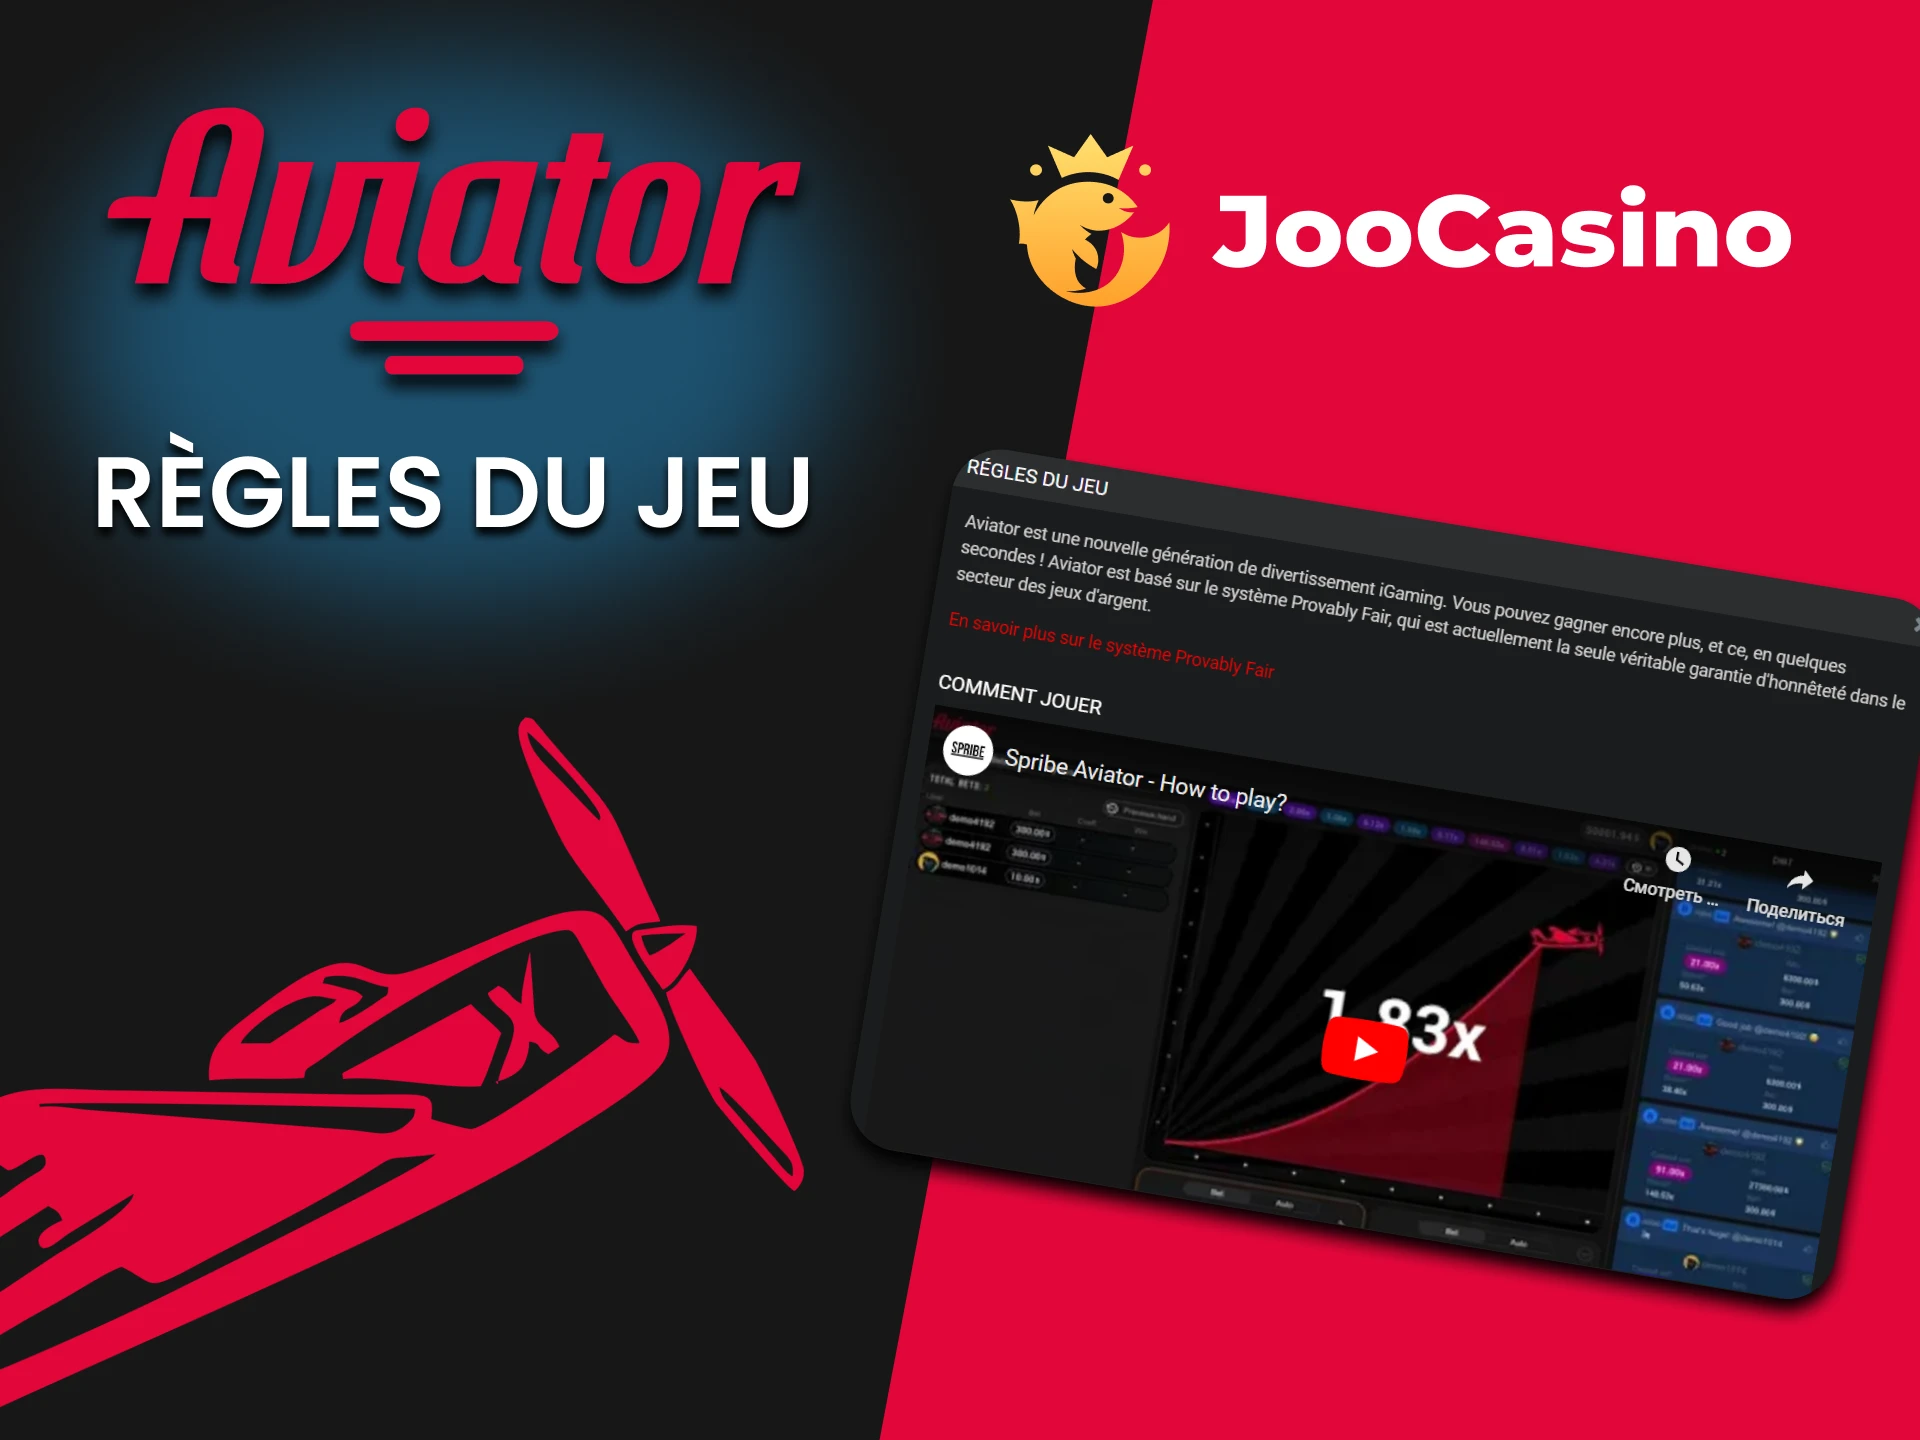 Apprenez les règles du jeu Aviator sur Joo Casino.